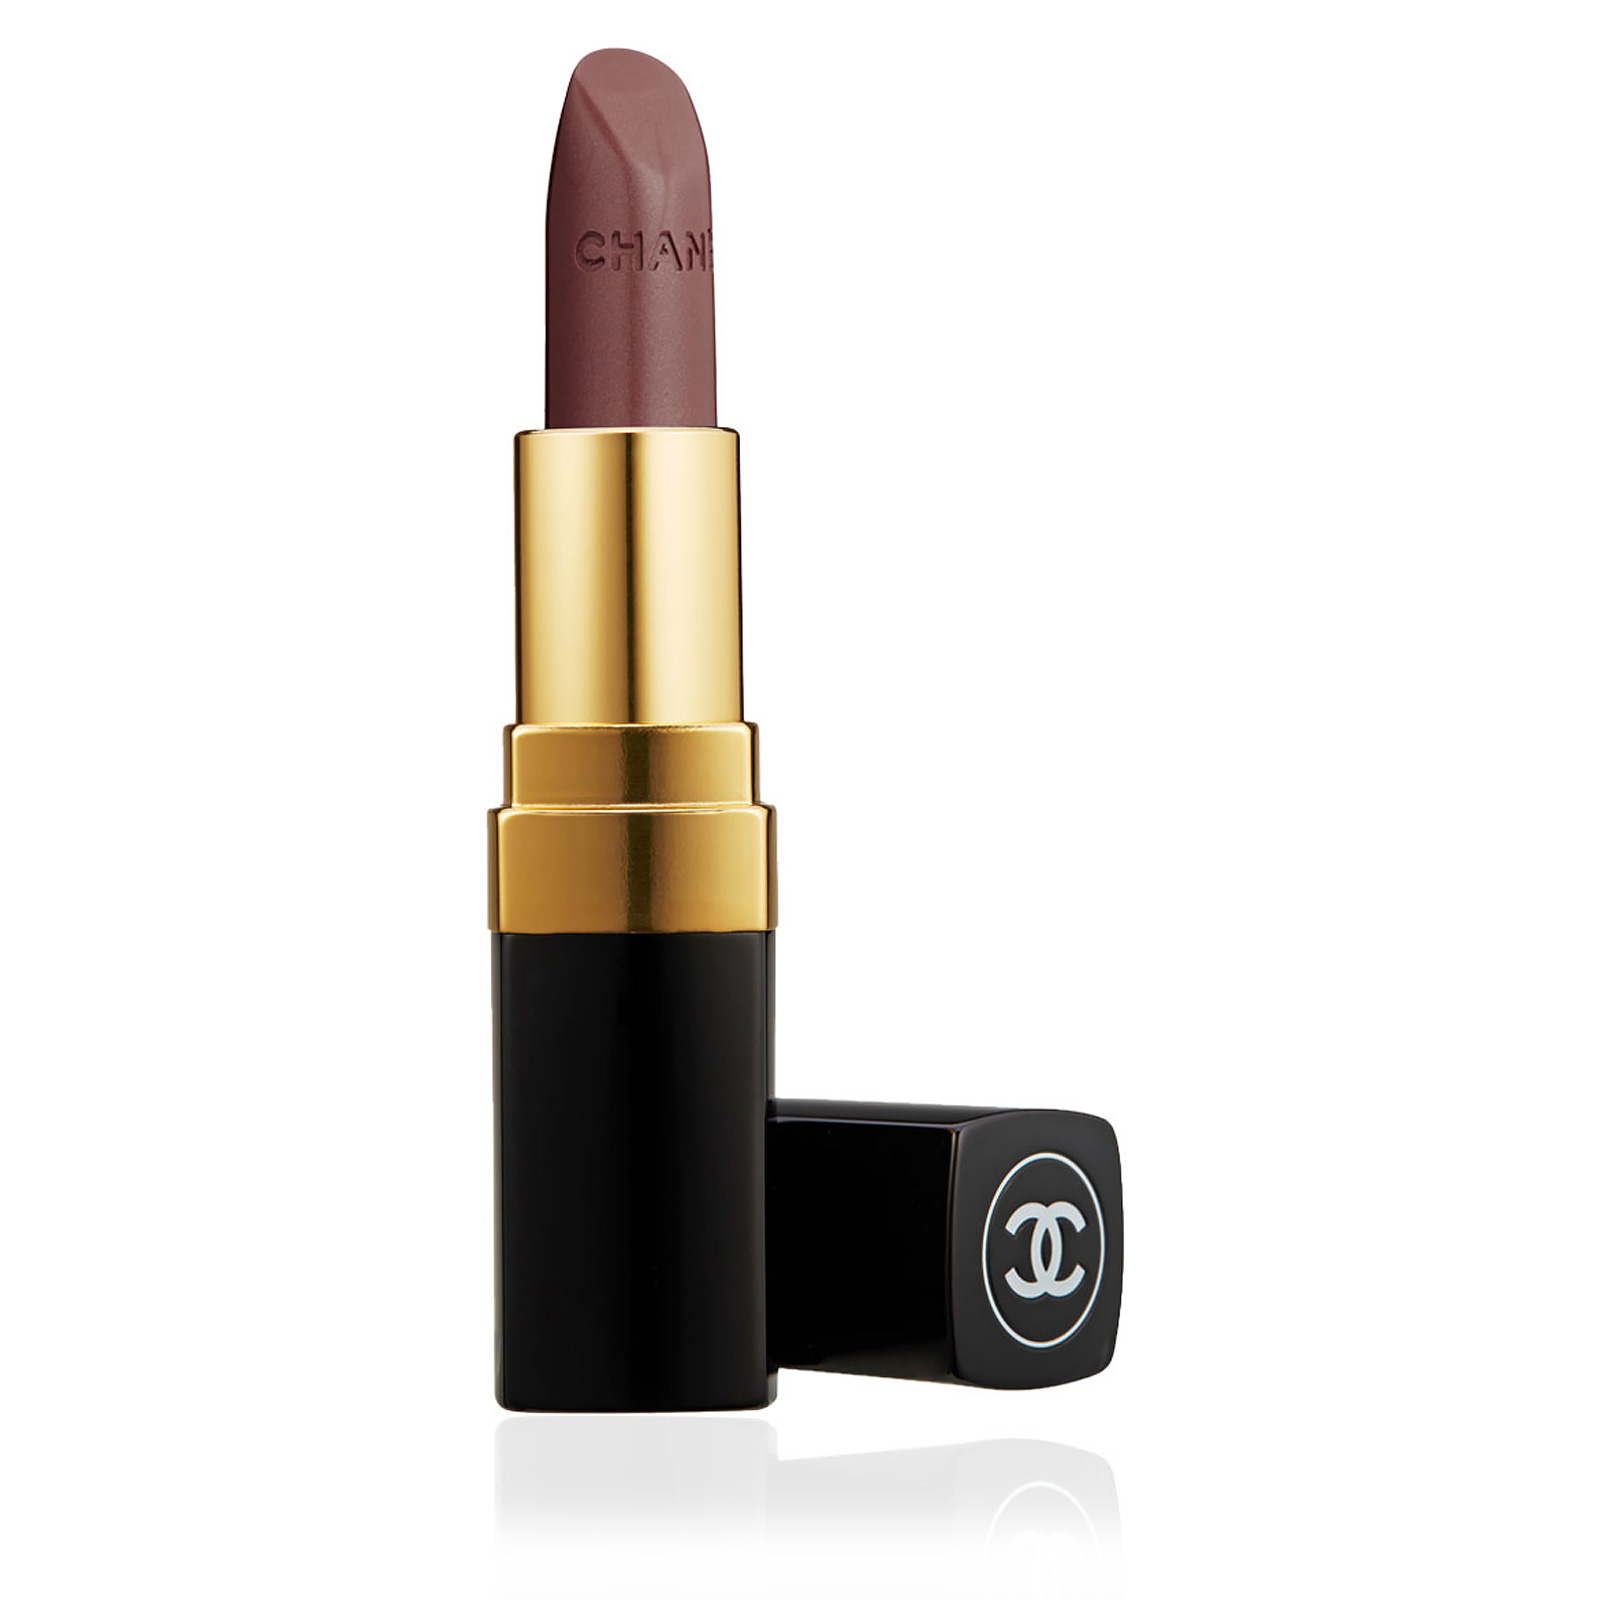 Chanel Rouge Coco Lipstick 434 Mademoiselle : : Beauty